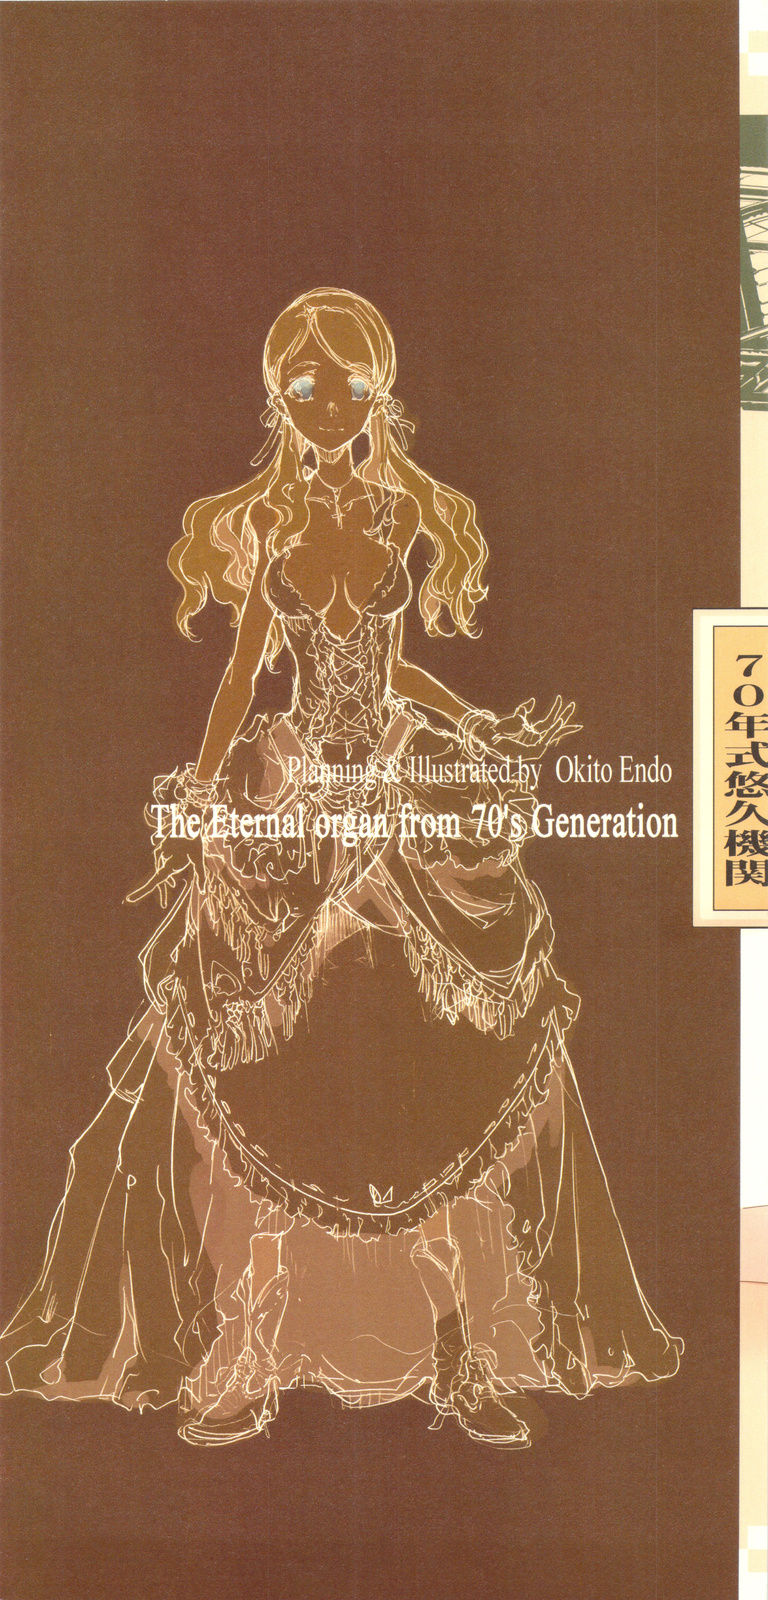 (C82) [70 Nenshiki Yuukyuu Kikan (Endou Okito)] TETSUBA-TEKKI CHRONOMETRIC HEARTS#3 ROYAL HIGHLANDERS + Paper (Original) (C82) [70年式悠久機関 (袁藤沖人)] TETSUBA-TEKKI CHRONOMETRIC HEARTS#3 ROYAL HIGHLANDERS +ペーパー (オリジナル)